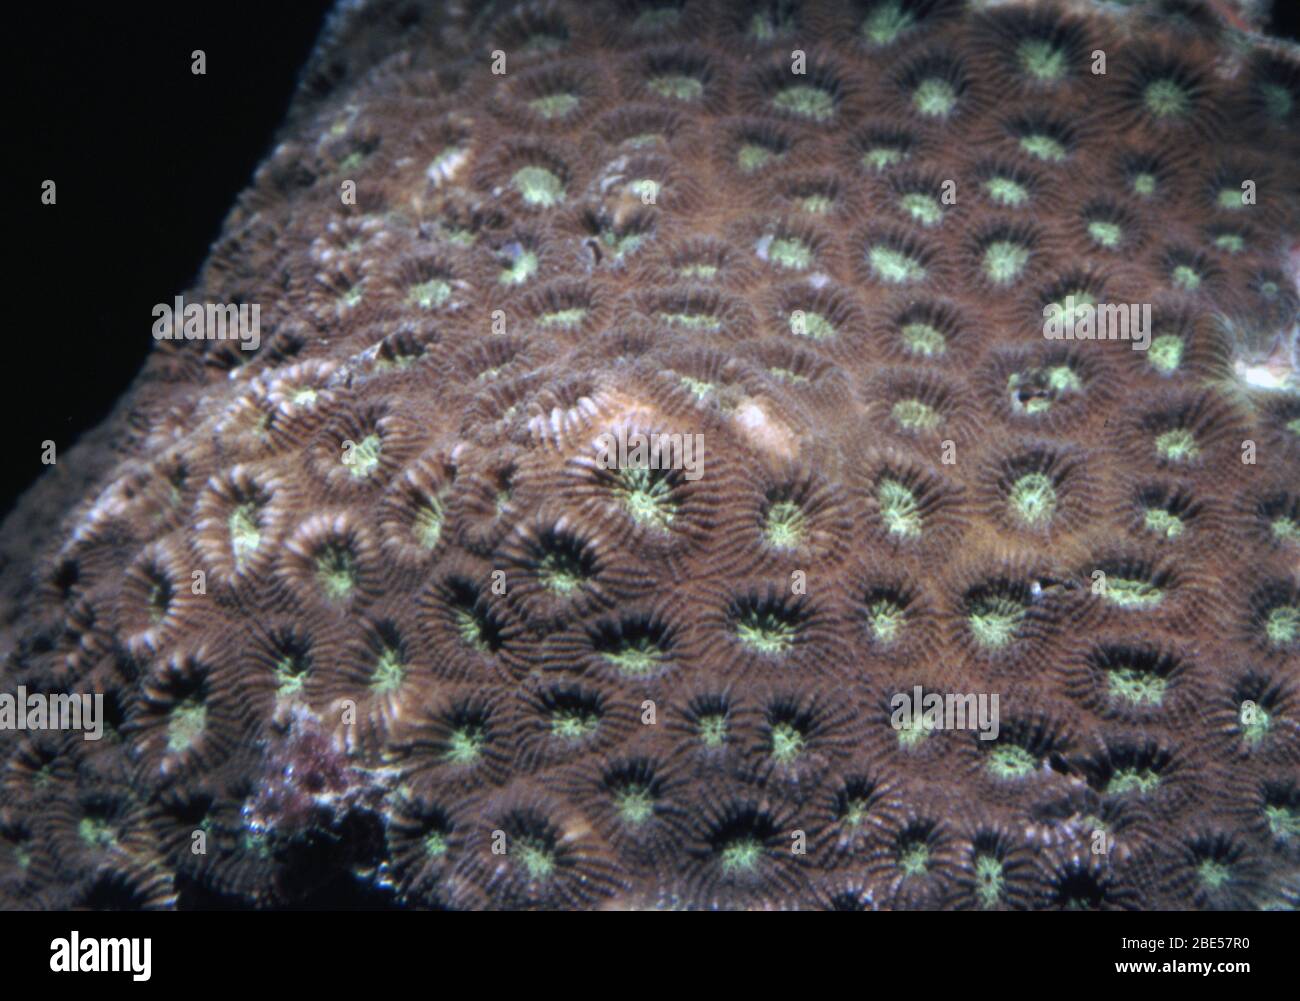 Pineapple brain coral, Favia sp. Stock Photo